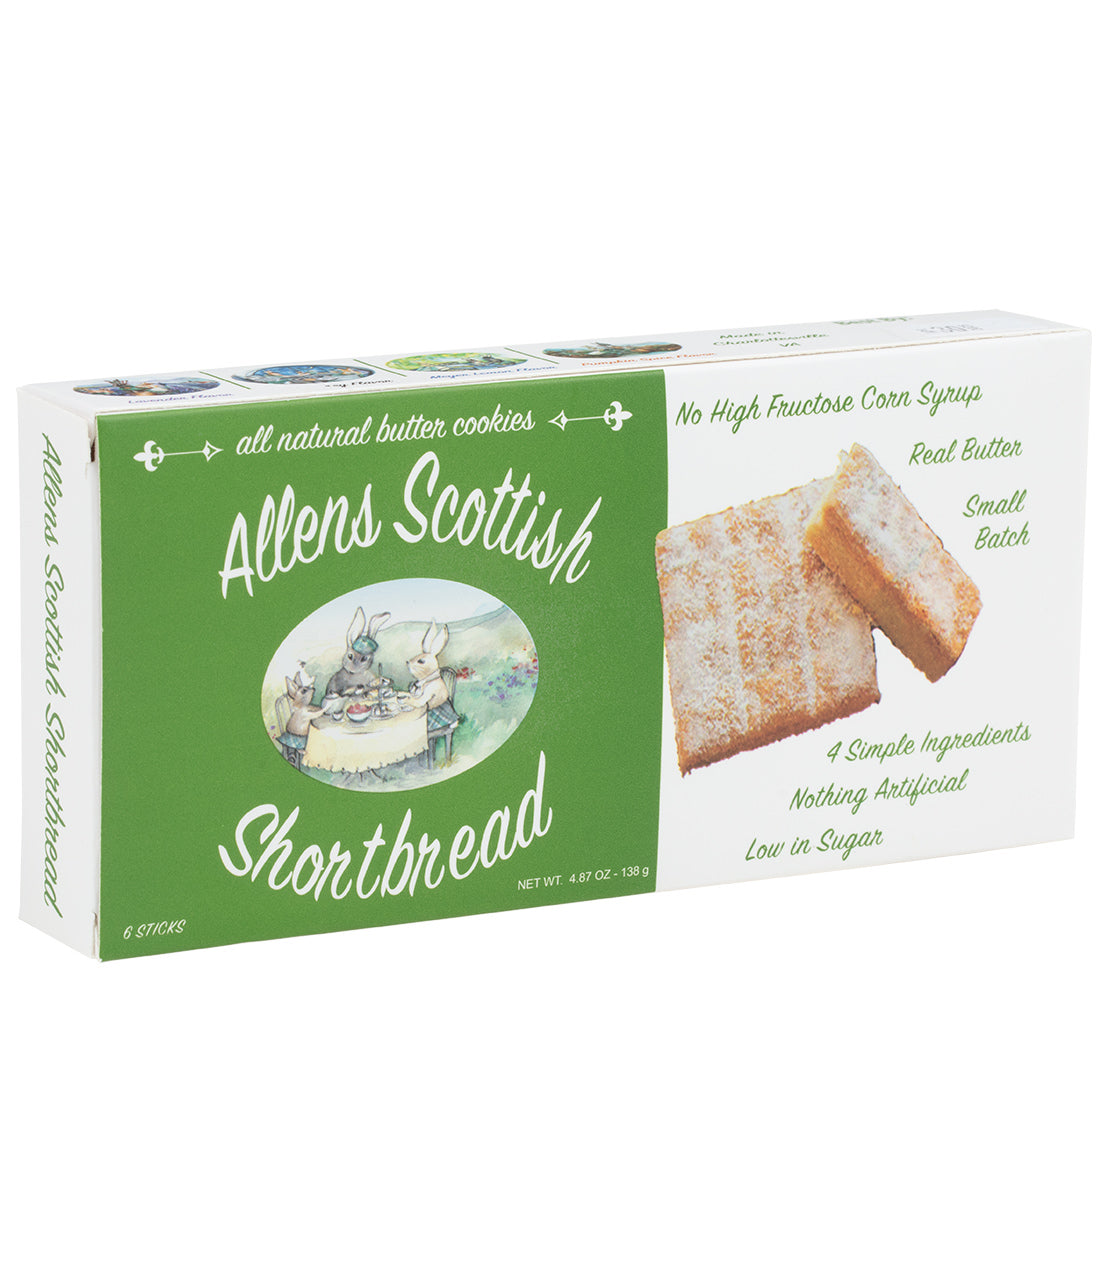 Allens Scottish Shortbread (Assorted Flavors)